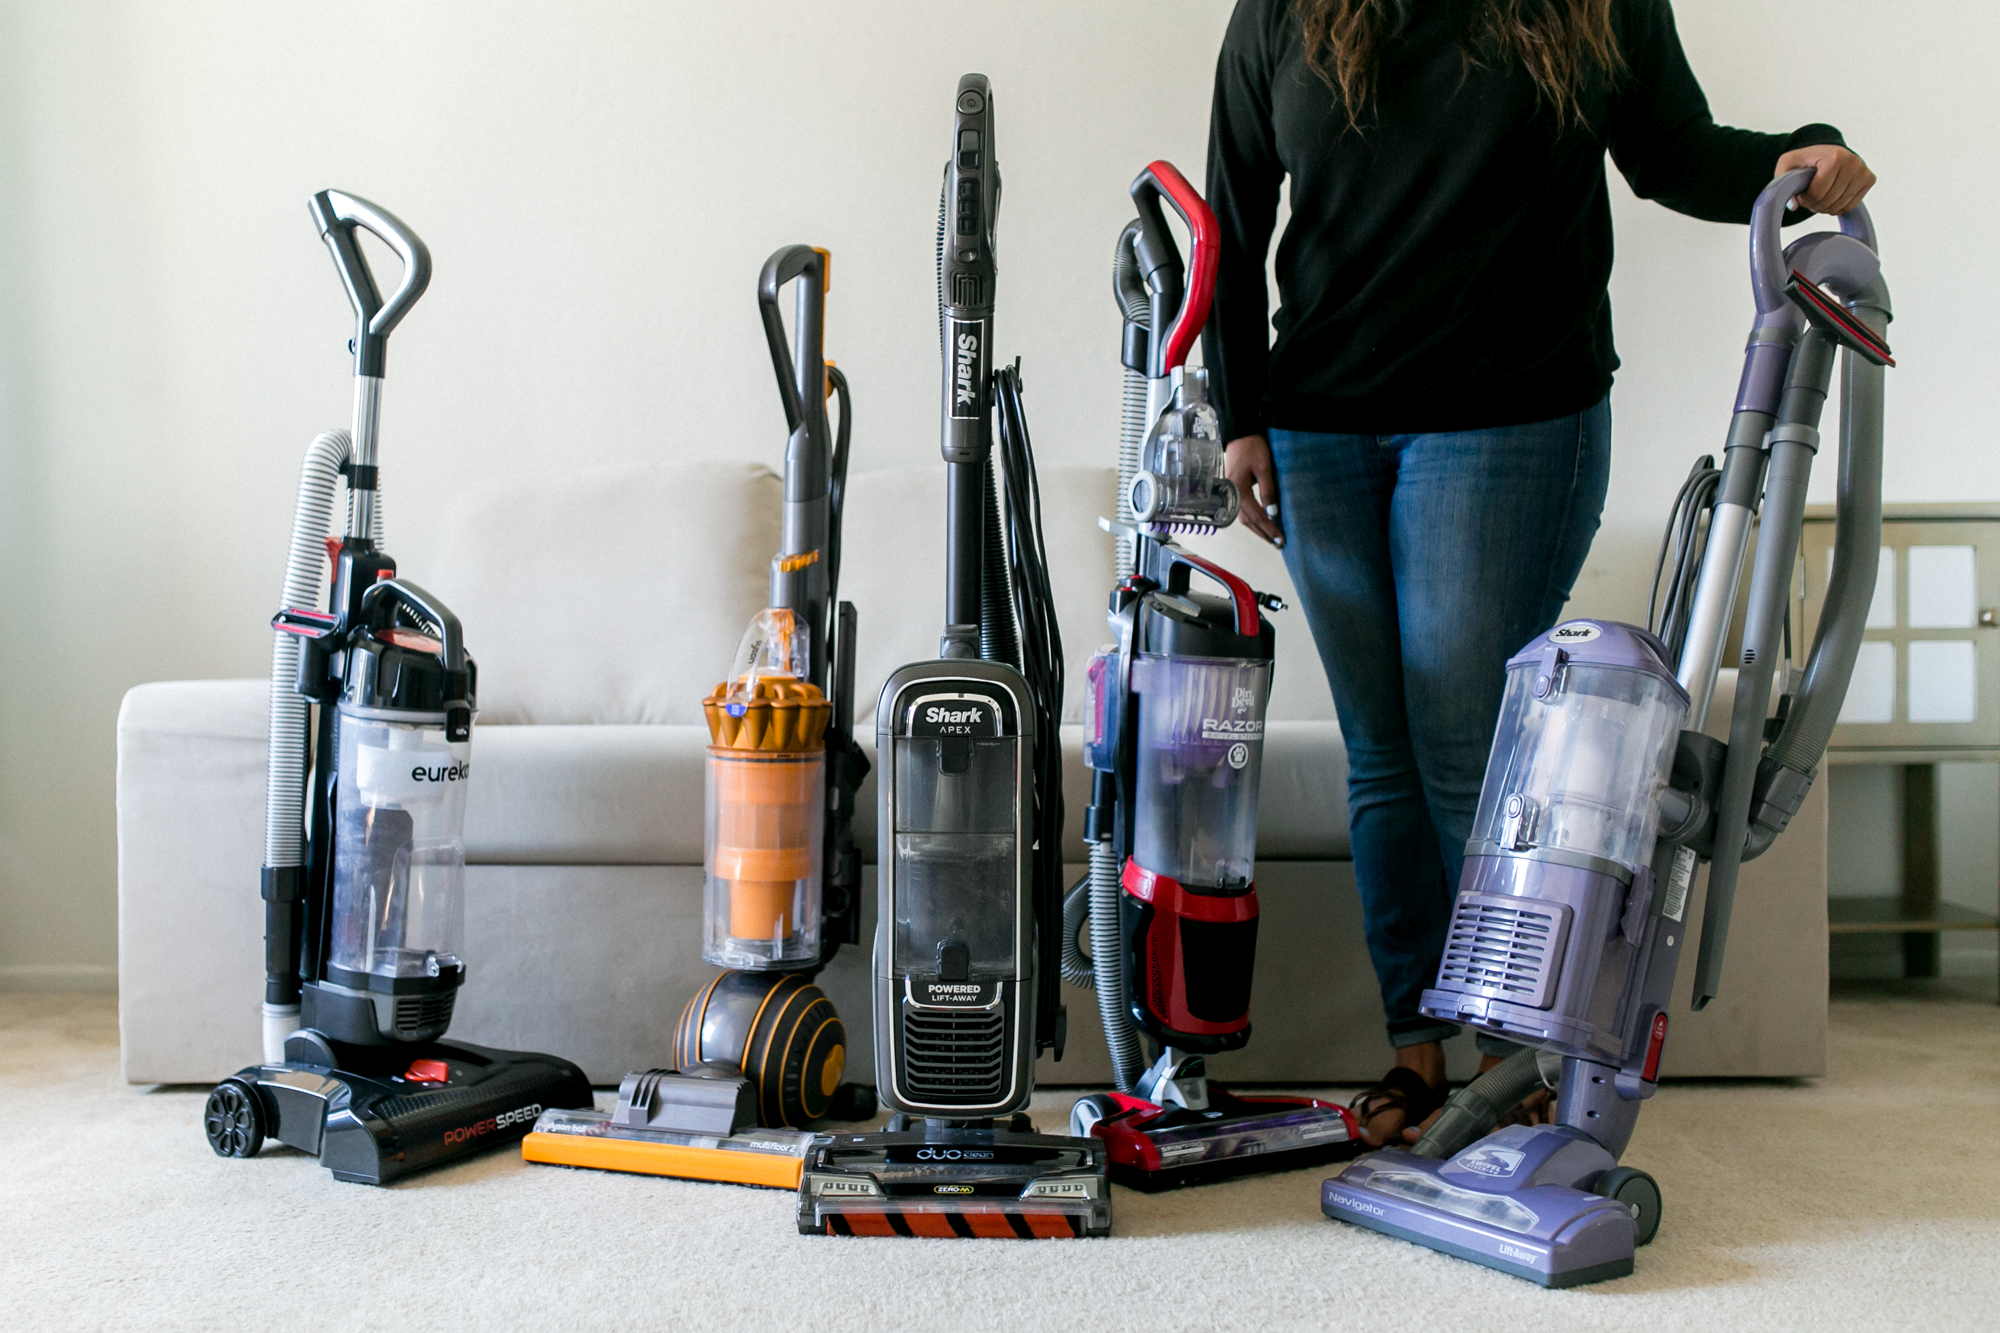 https://www.yourbestdigs.com/wp-content/uploads/2019/04/best-upright-vacuum-cleaners.jpg